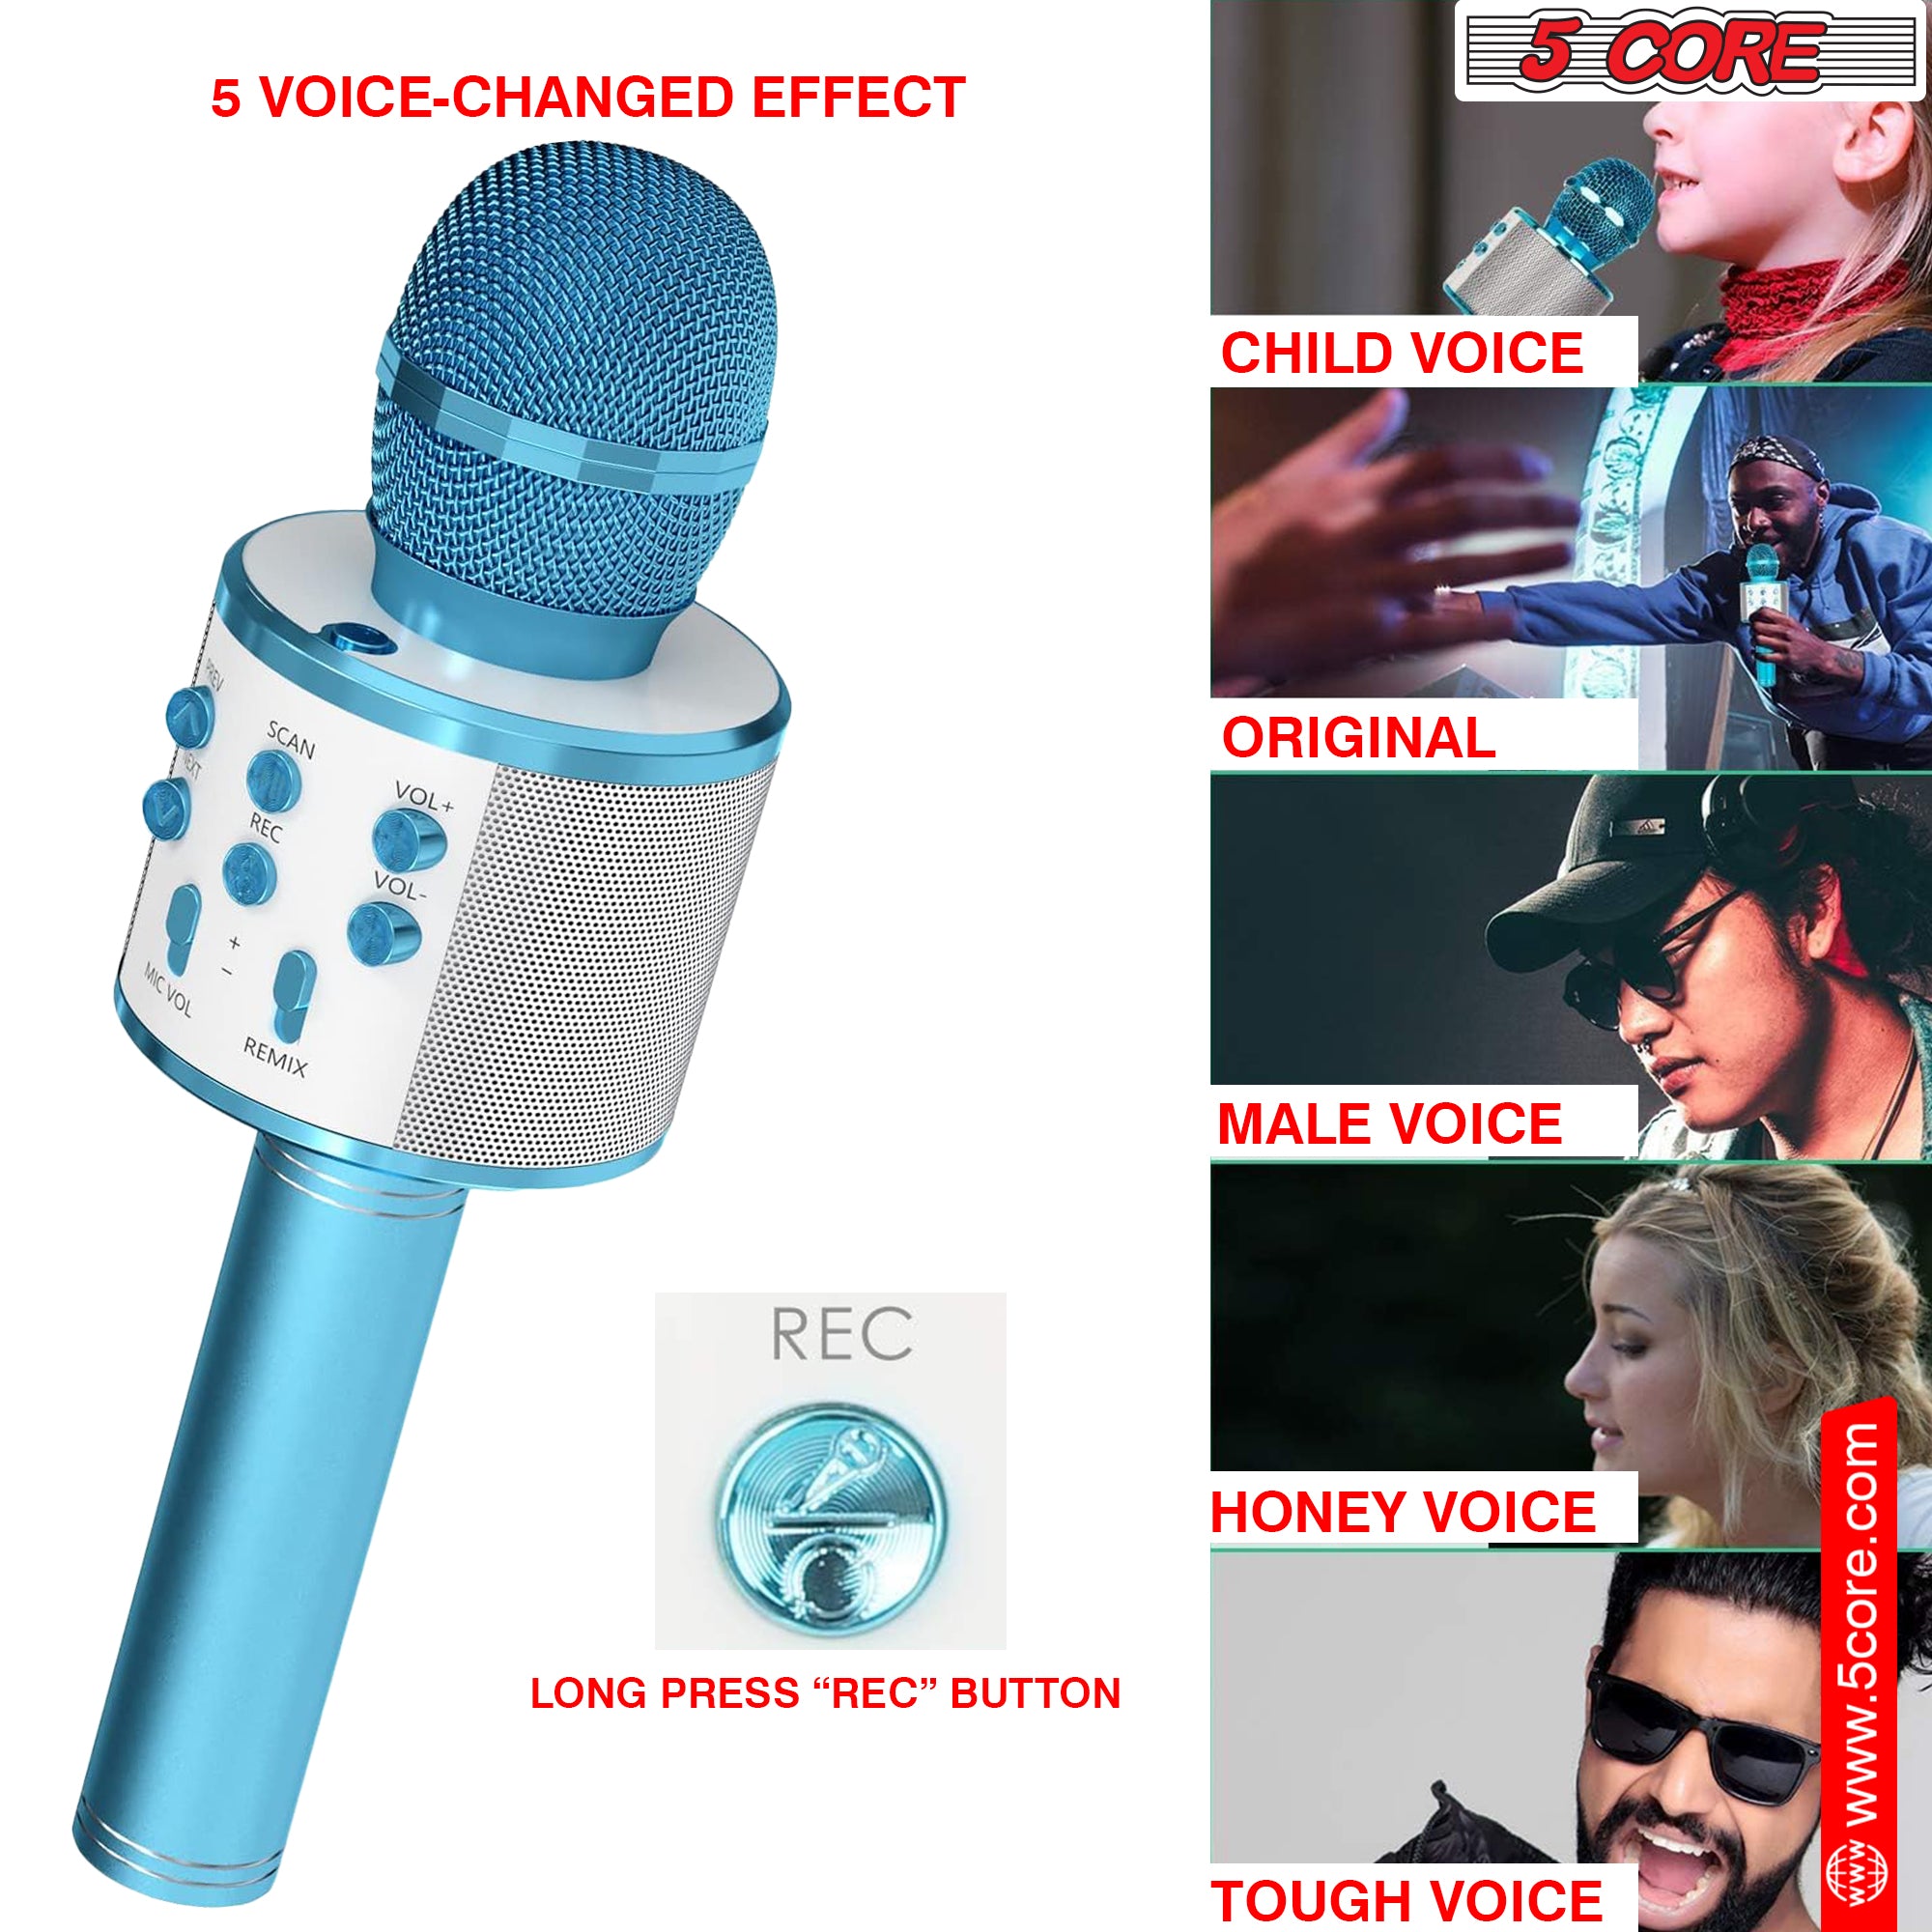 5 Core Bluetooth Wireless Karaoke Microphone, All-in-One Premium Handheld Karaoke Mic Speaker Recorder Player w/ Adjustable Remix FM Radio Great Gifts for Girls Boys Adults All Age (Blue)- WM SKP BLU